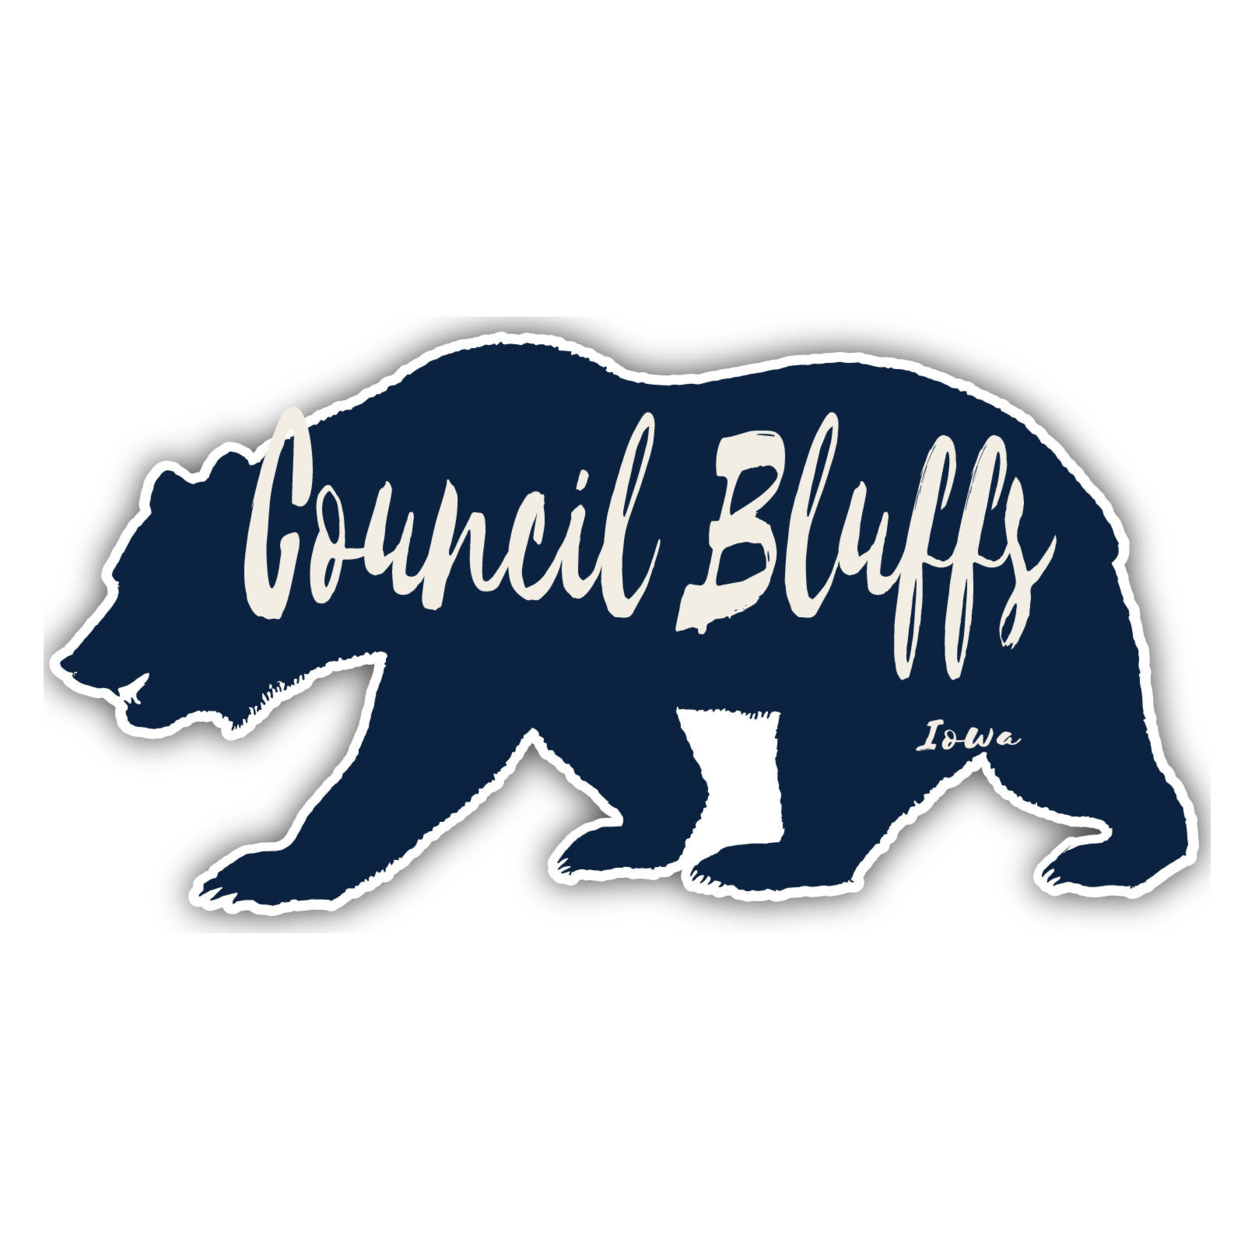 Council Bluffs Iowa Souvenir Decorative Stickers (Choose Theme And Size) - Single Unit, 12-Inch, Adventures Awaits